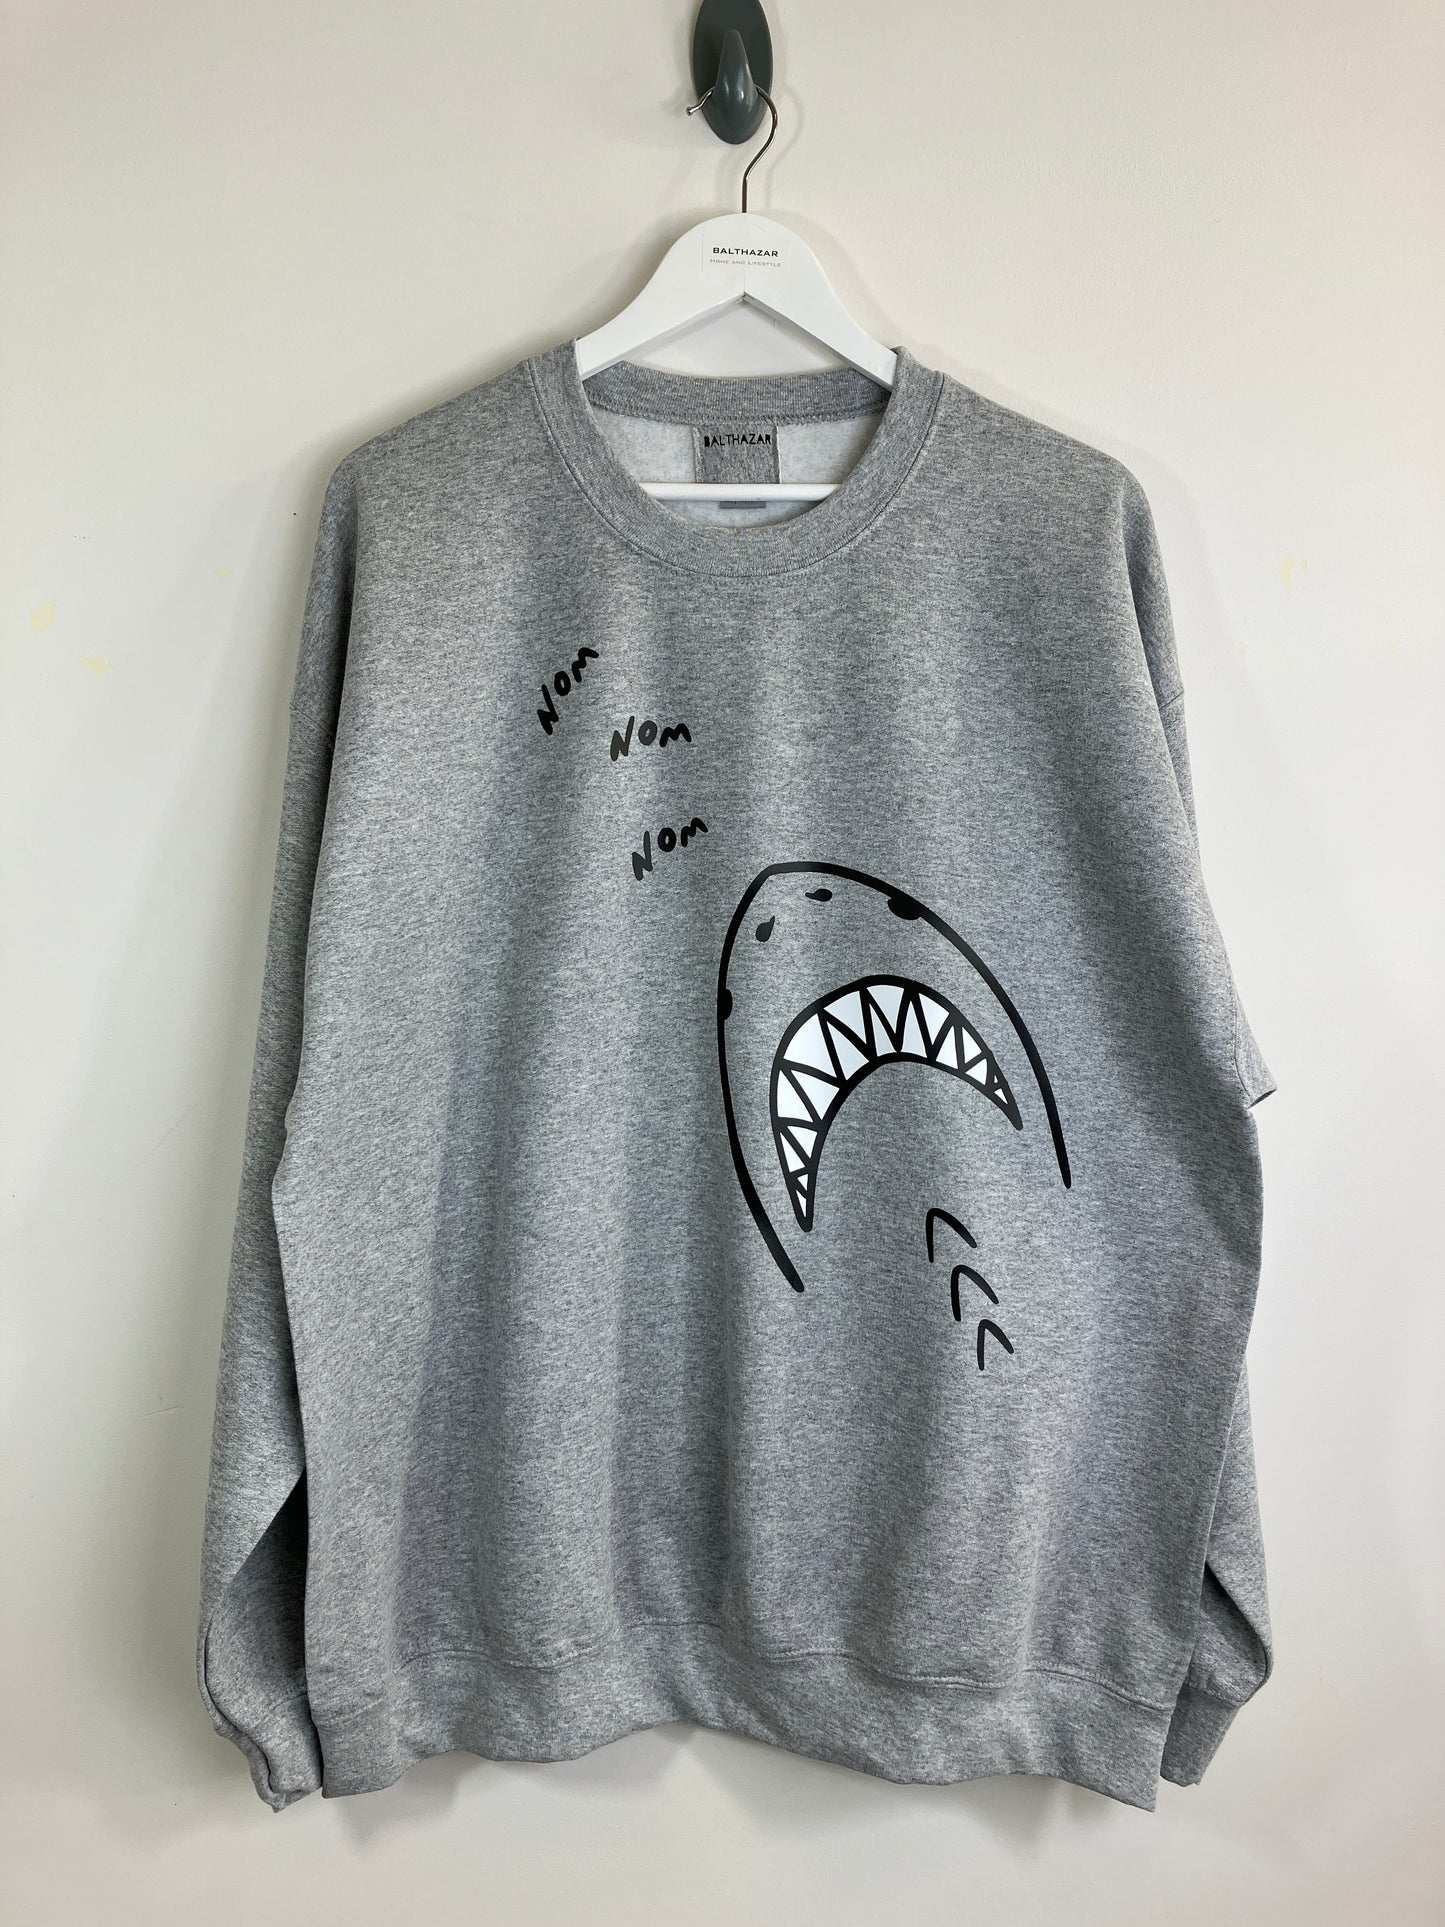 Mega Shark sweatshirt - novelty customisable